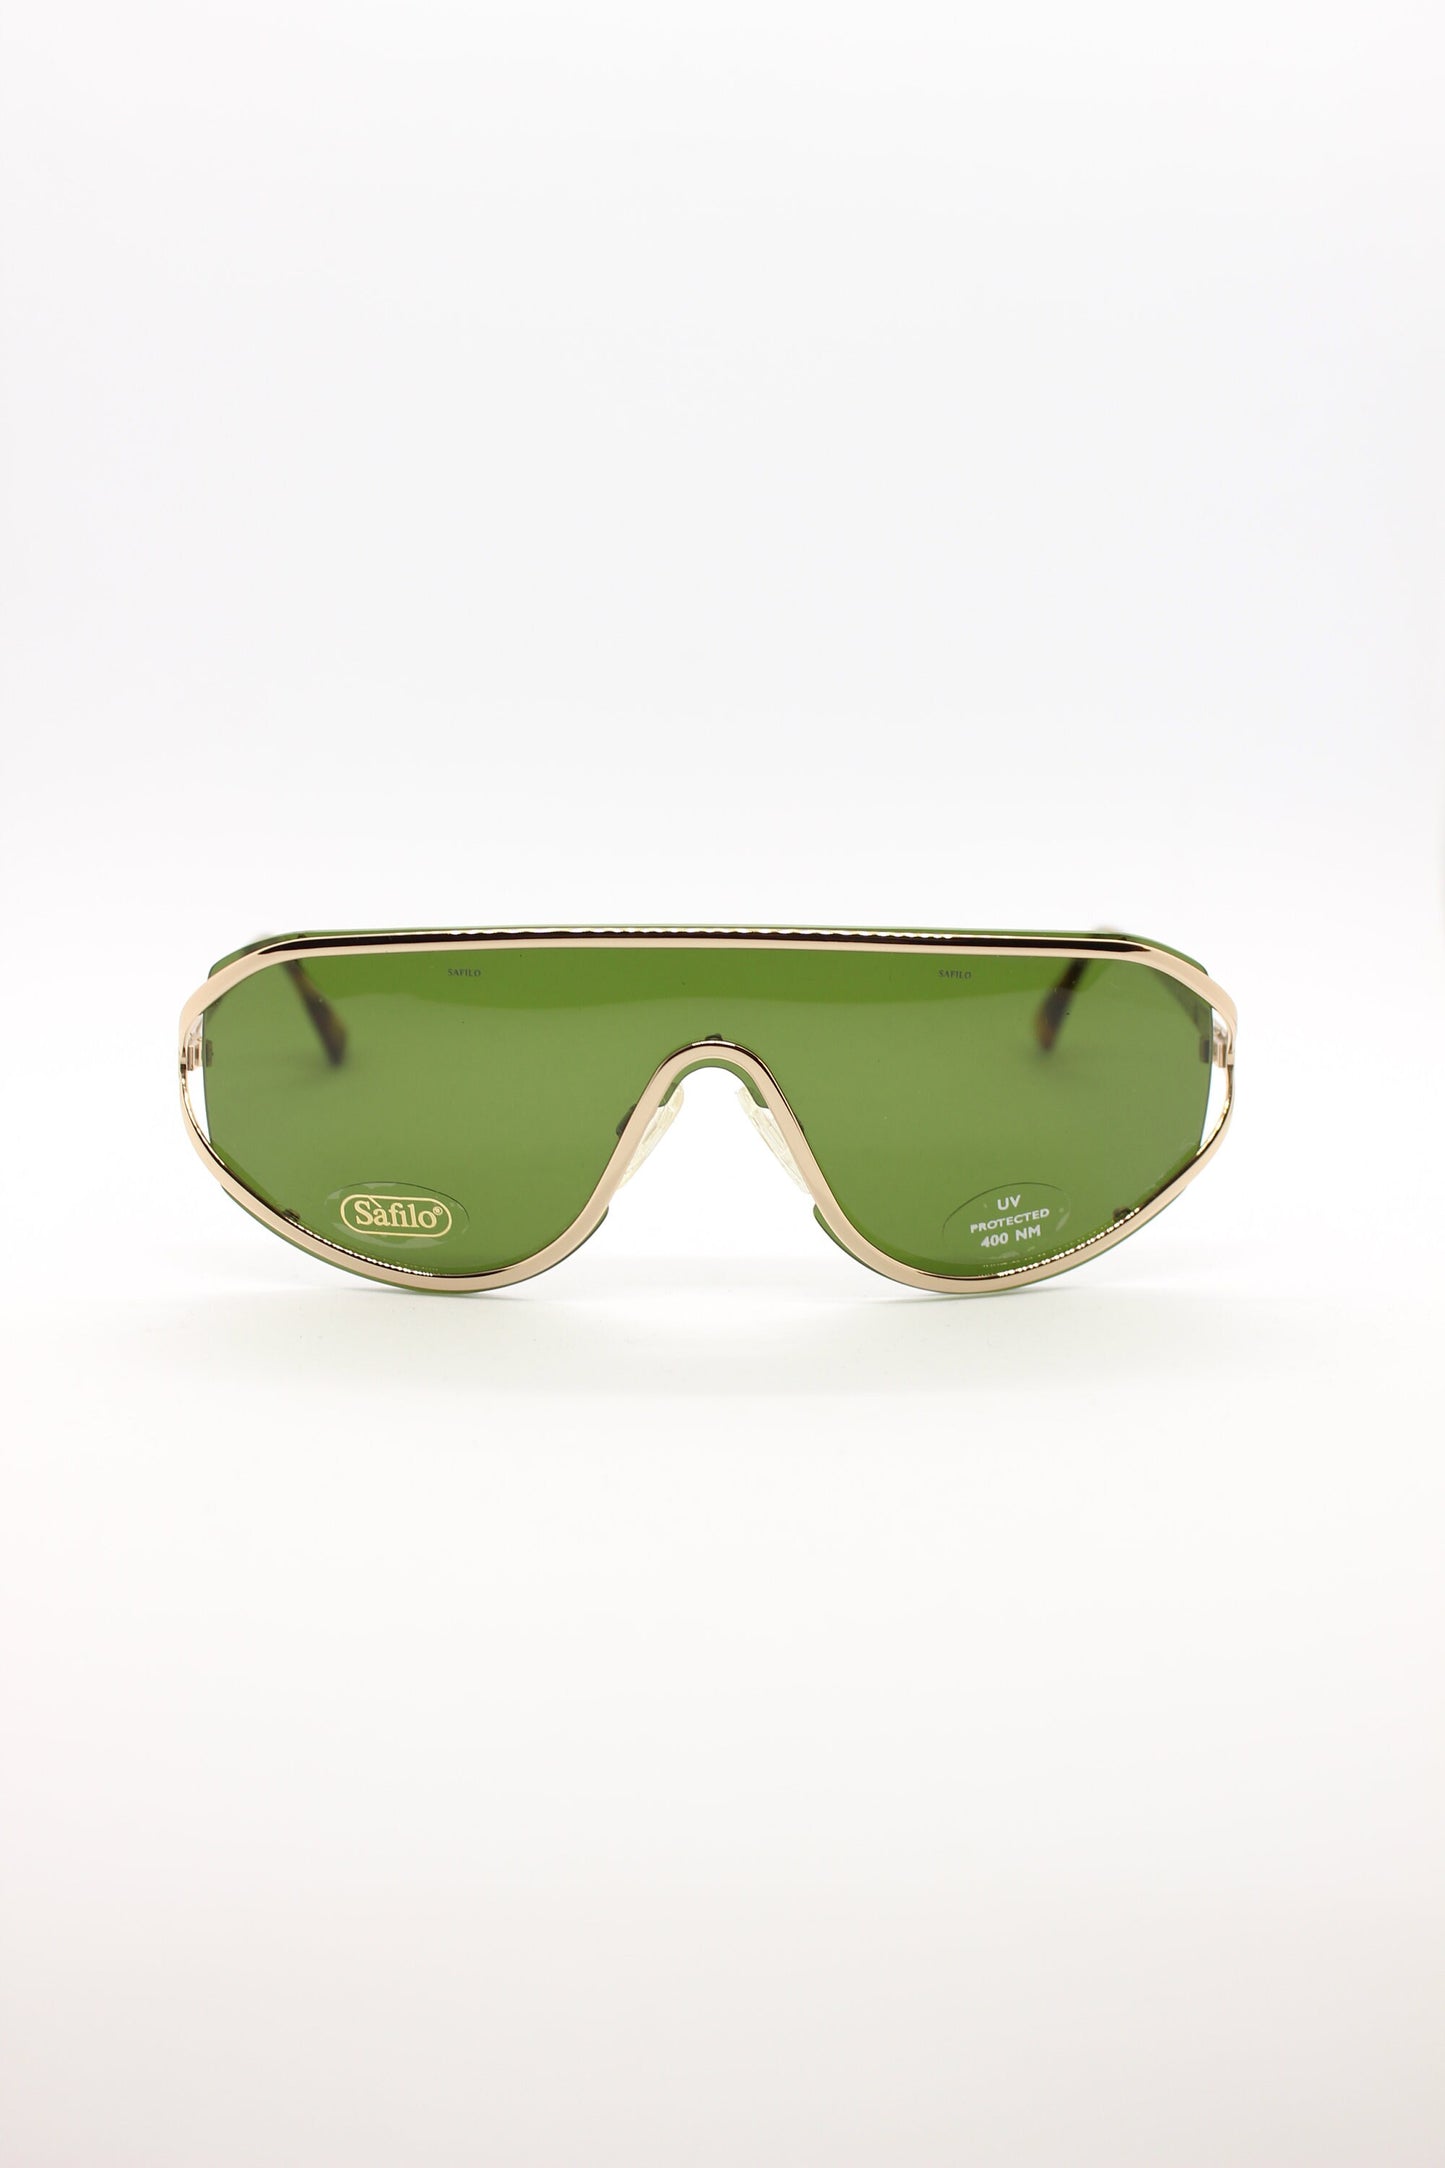 SAFILO 90s Mod. "Emozioni" Vintage New Old Stock sunglasses. Never worn